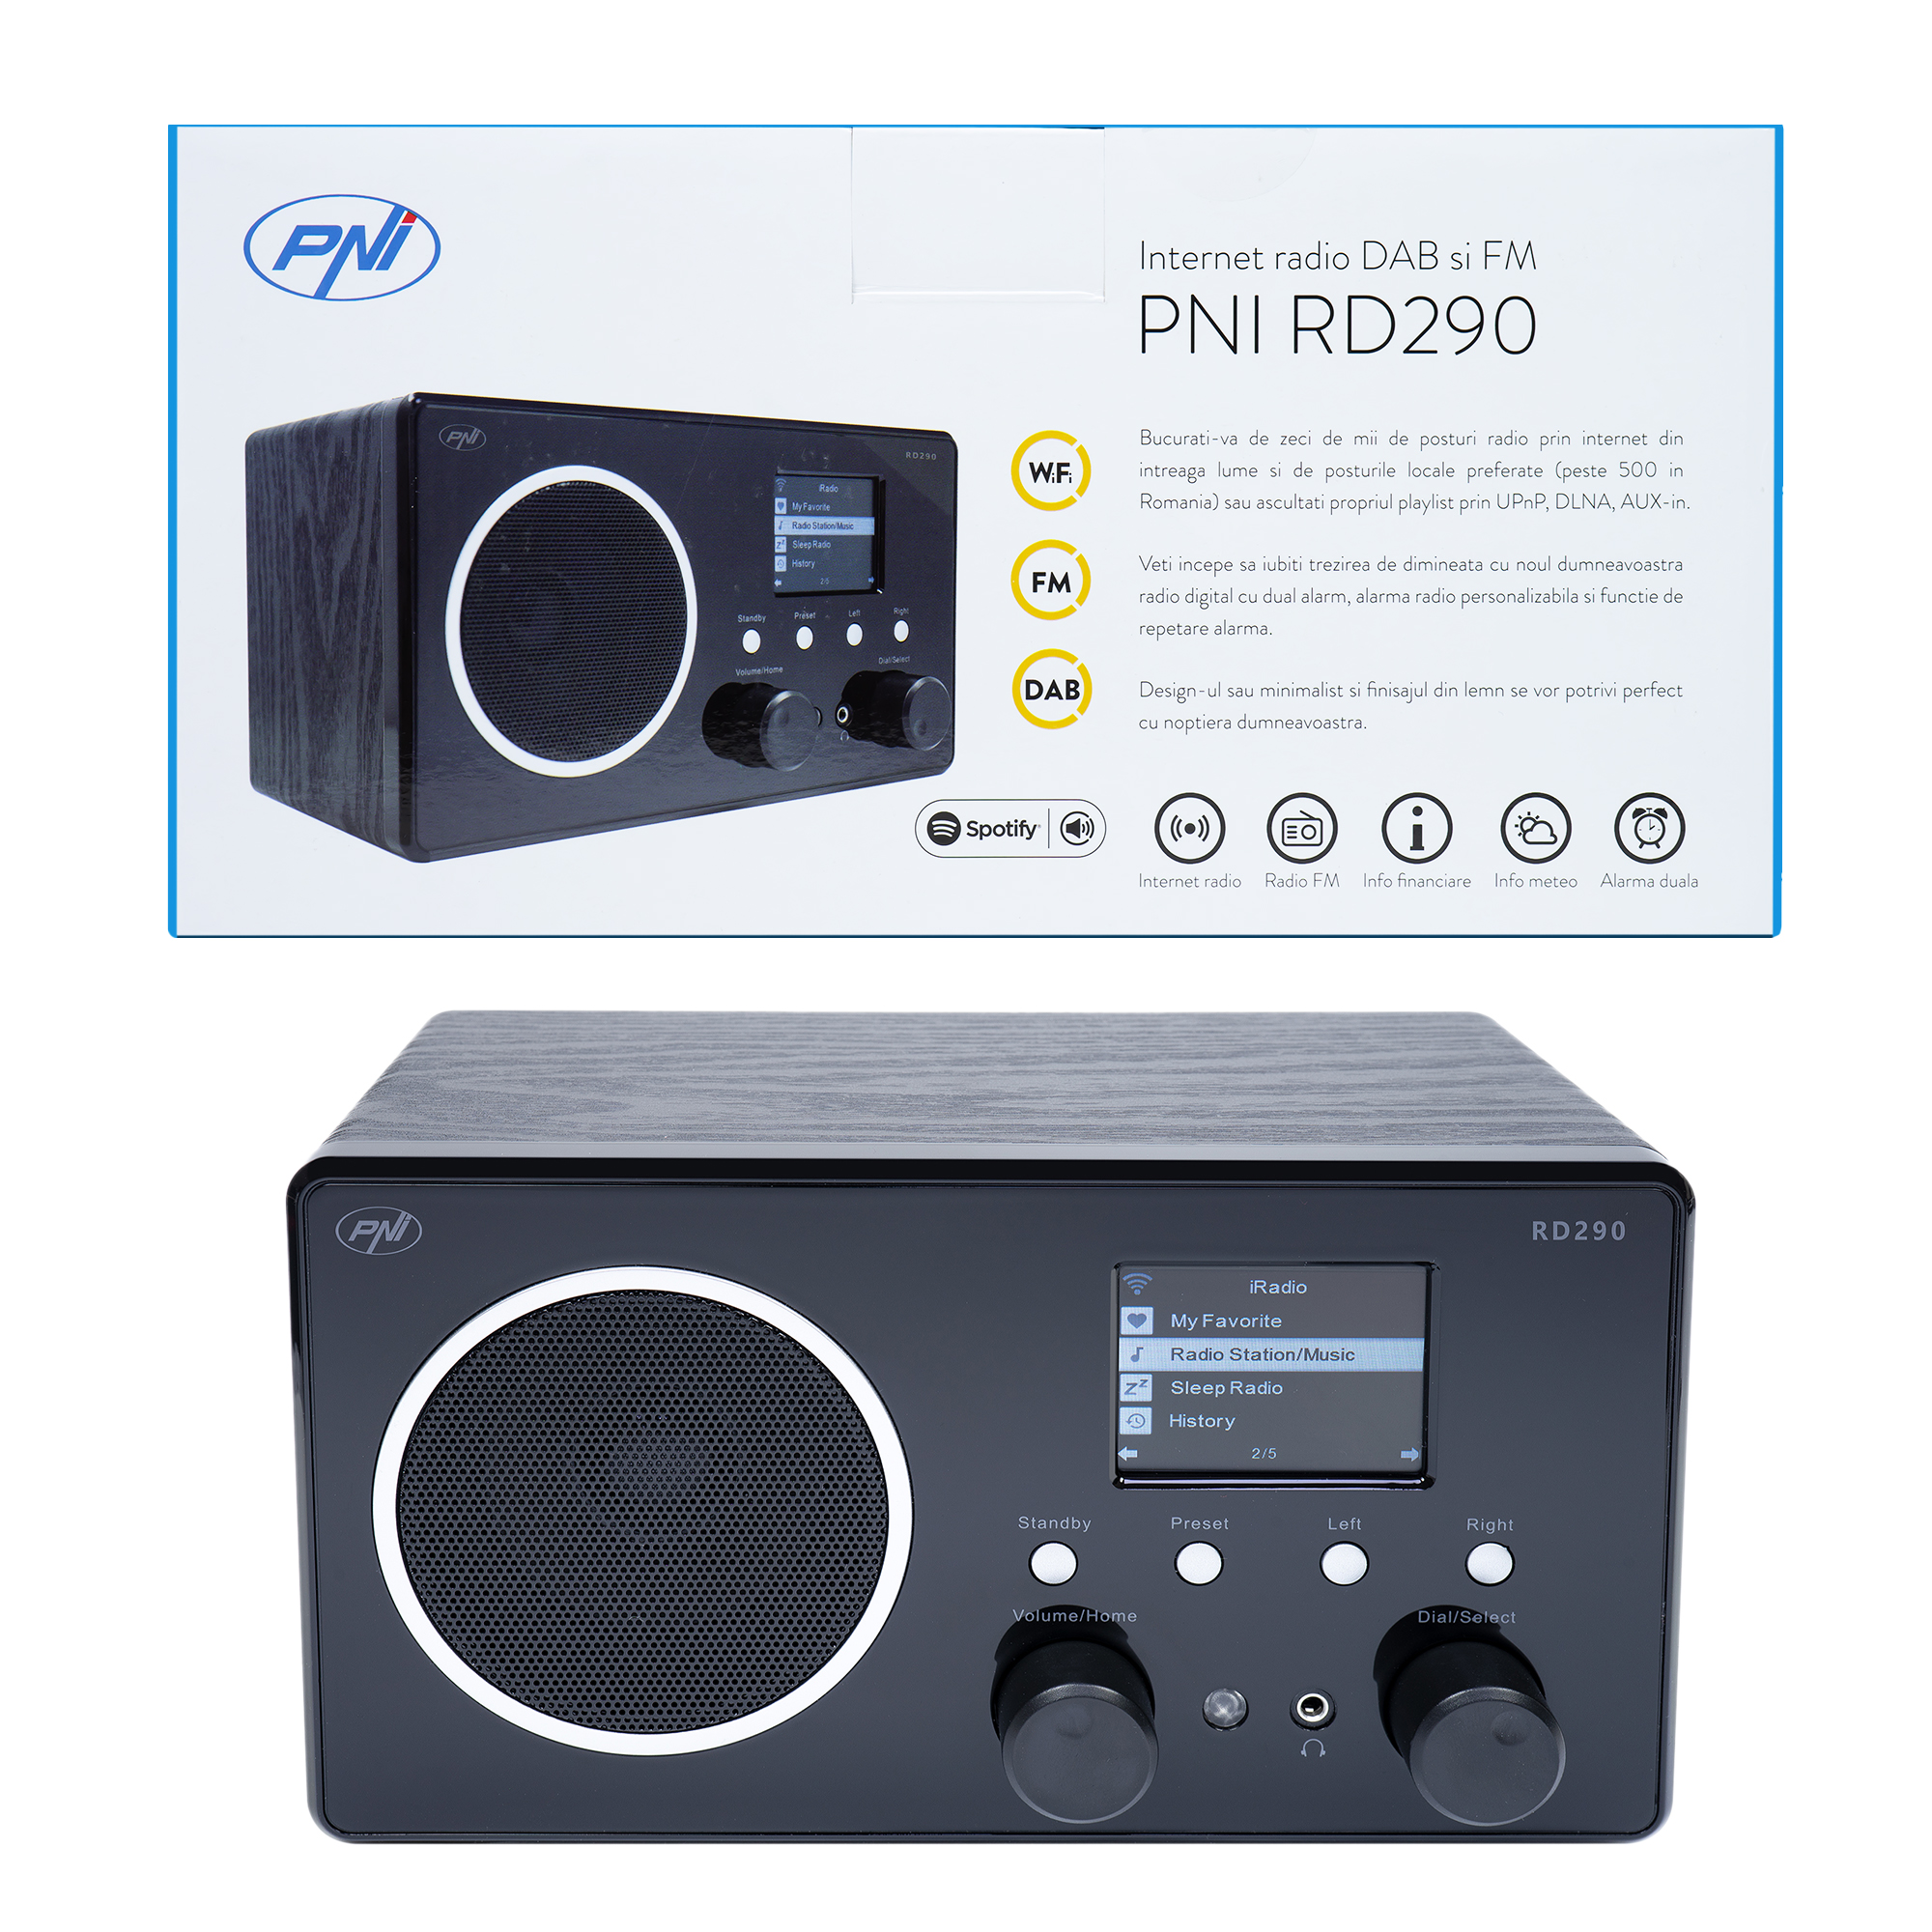 Radio internet DAB si FM PNI RD290 prin Wi-Fi, analog FM, Spotify Connect, APP Air Music Control, DLNA si UPnP, Dual Alarm, AUX-in 3.5, ecran color 2.4 inch